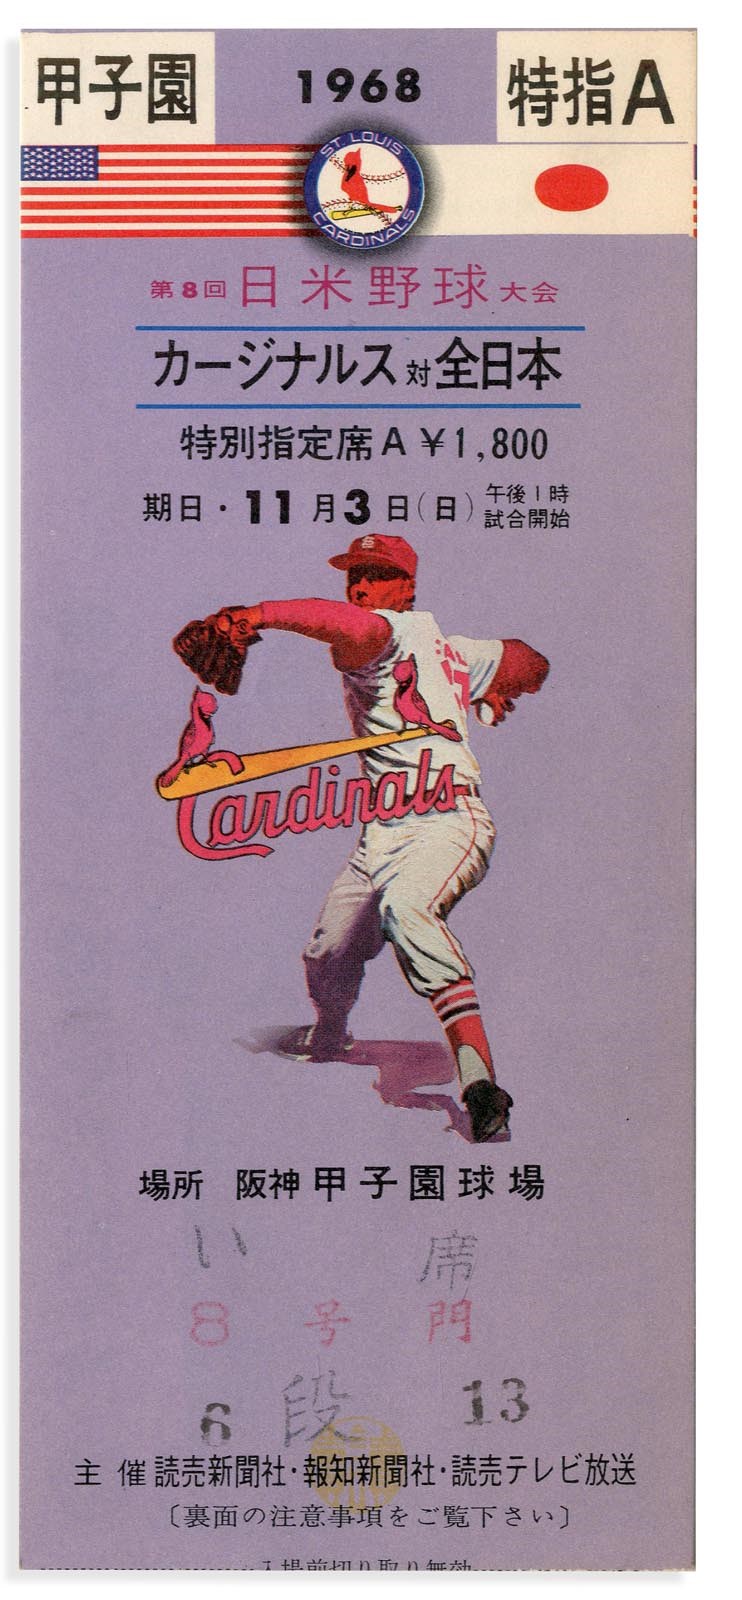 - 1968 St. Louis Cardinals Tour of Japan Ticket and Envelope